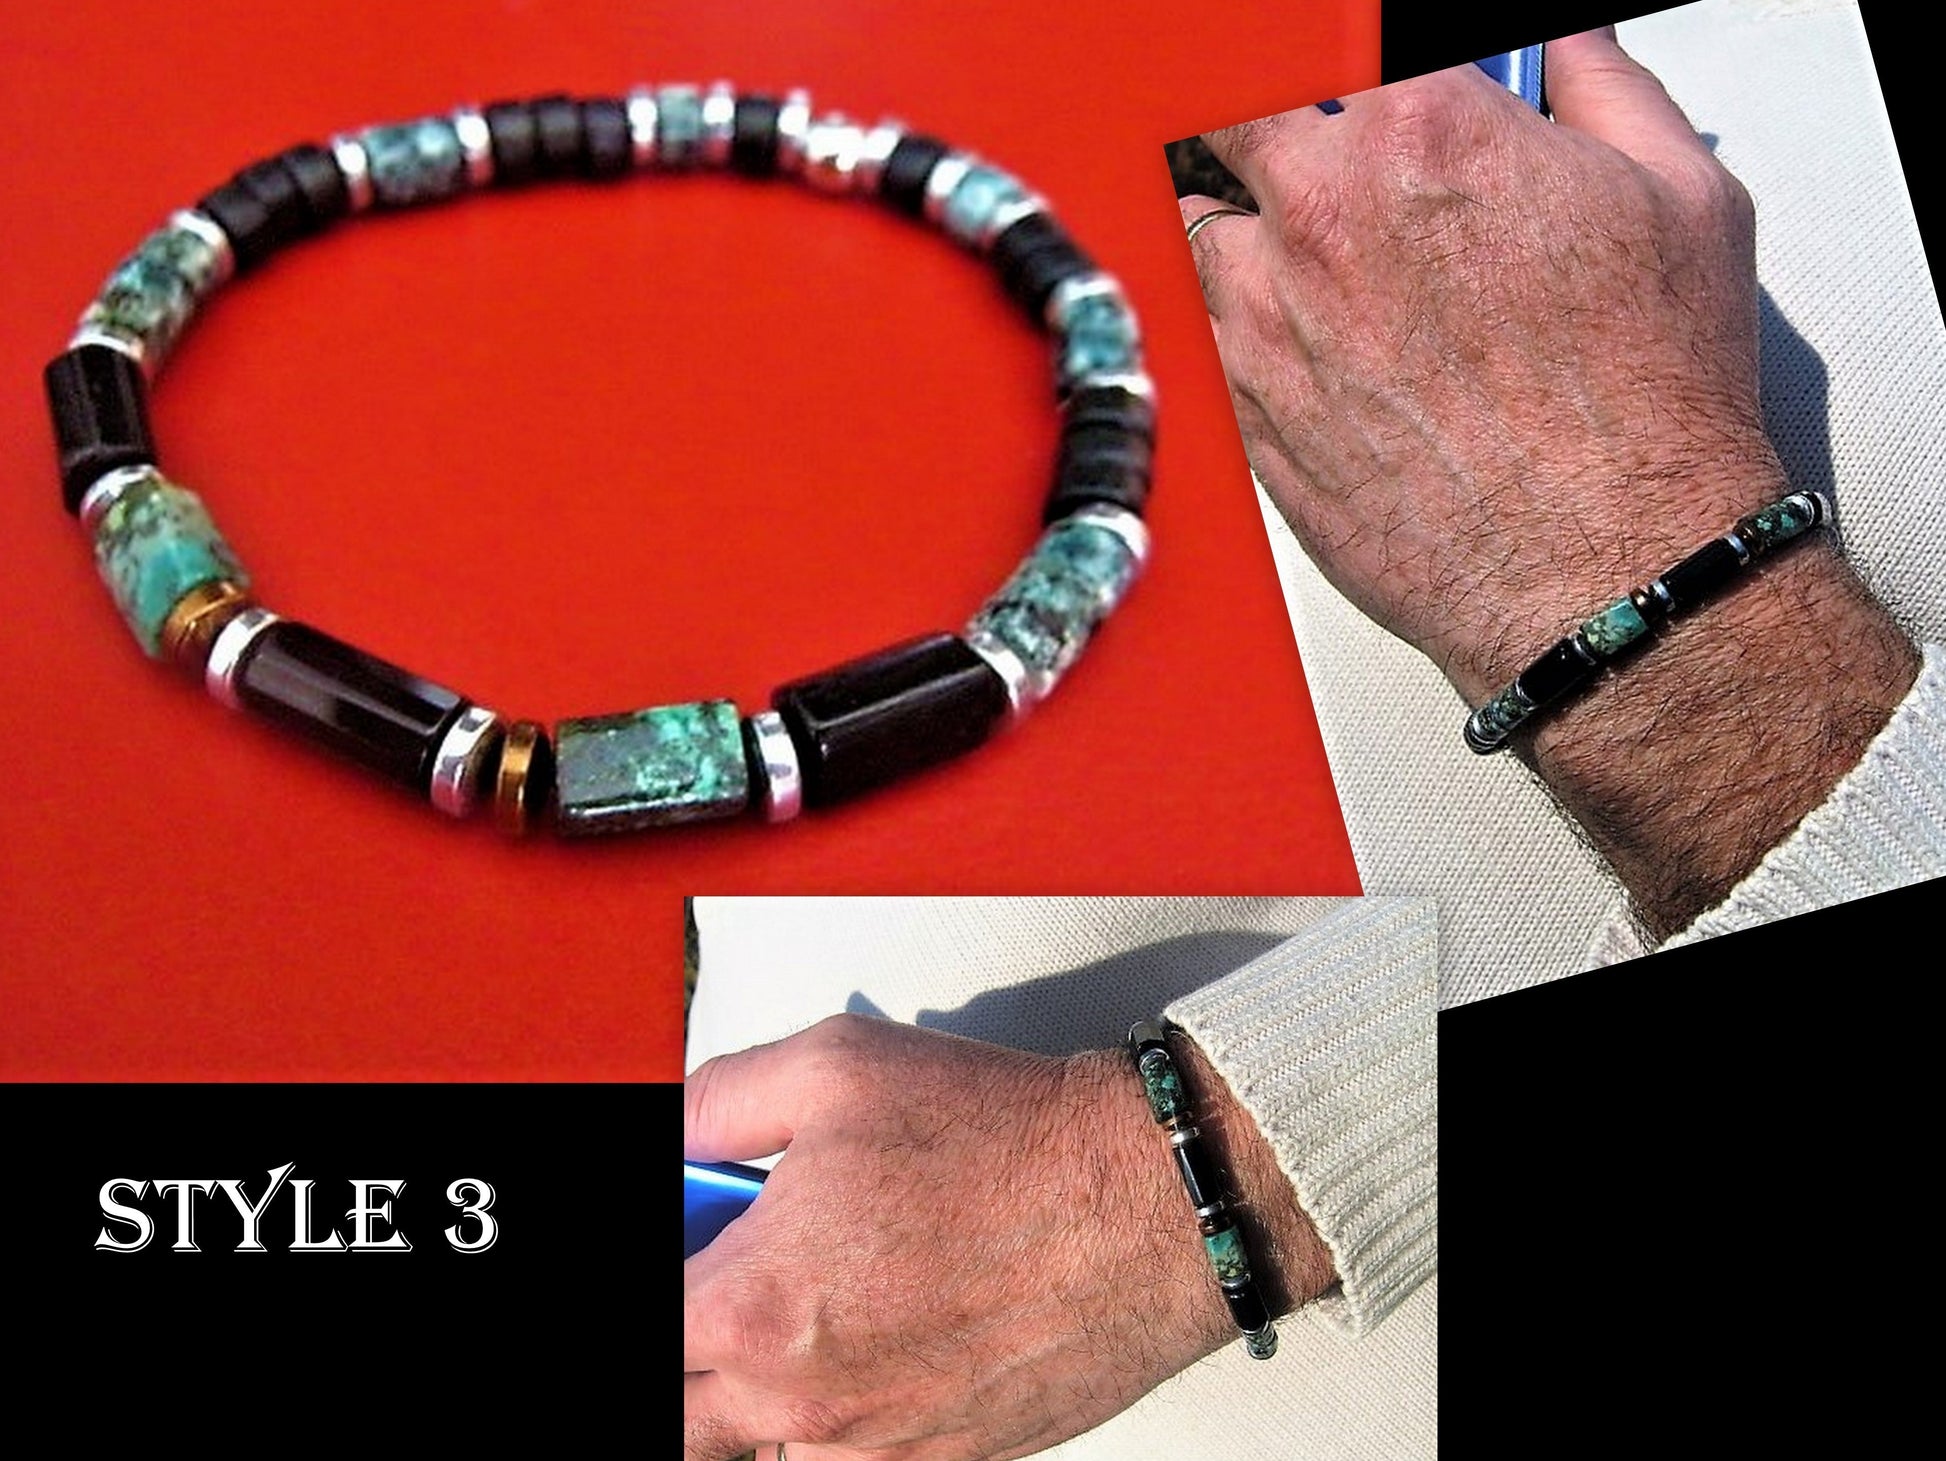 CAMELYS MAGIC 4 MEN - Men Bracelet  african TURQUOISE Tourmaline Onyx Lava Coco wood heishi Hematite Healing stone, handmade bracelet men gift